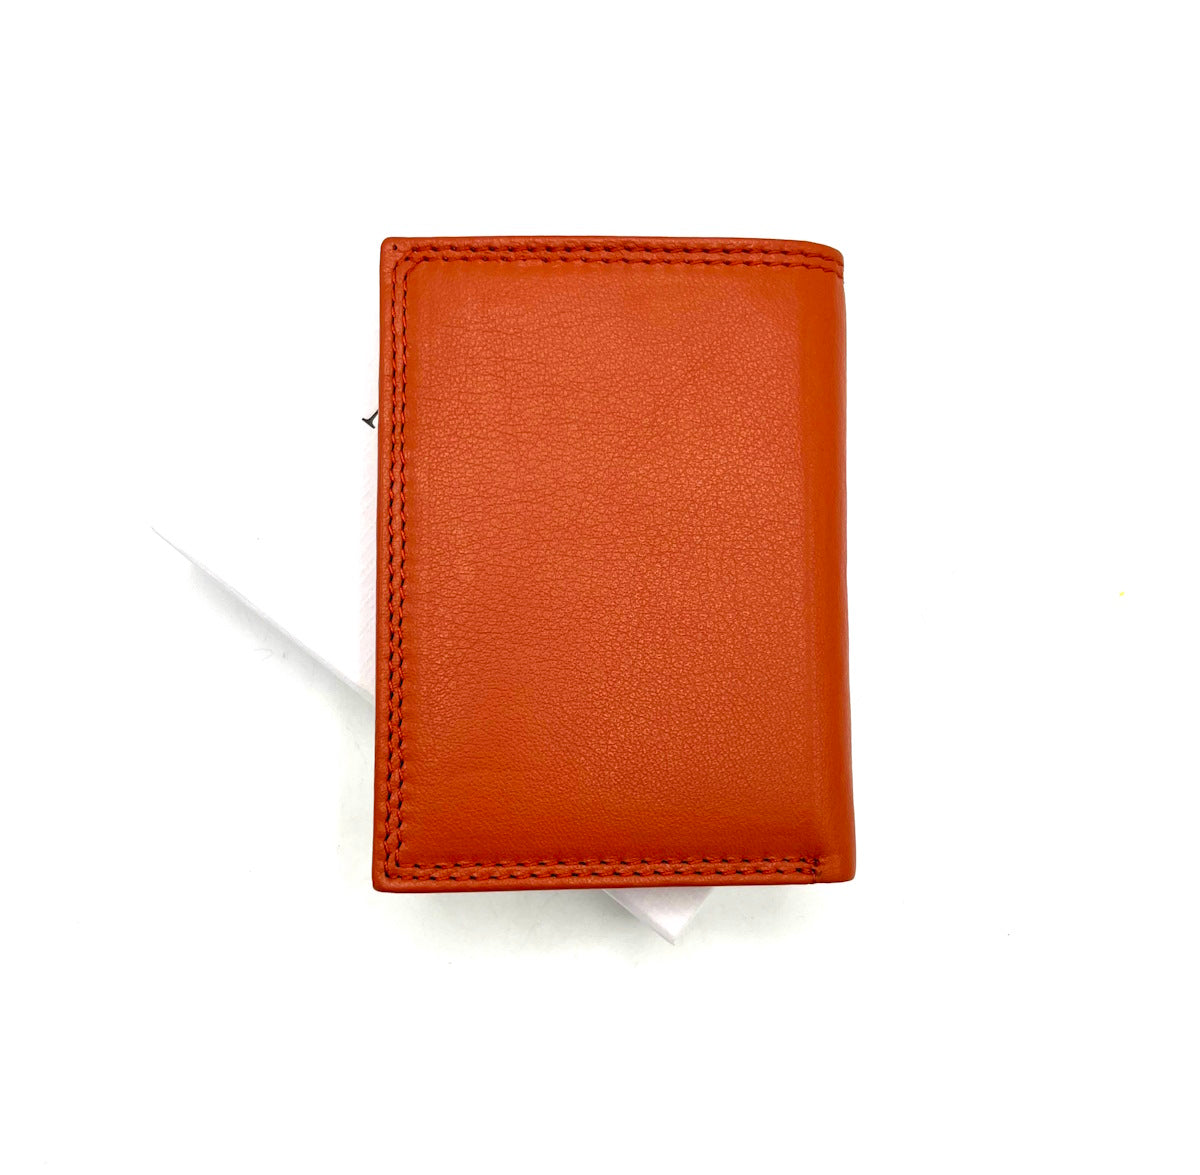 Genuine leather wallet, N.Gabrielli, art. PDK391-91